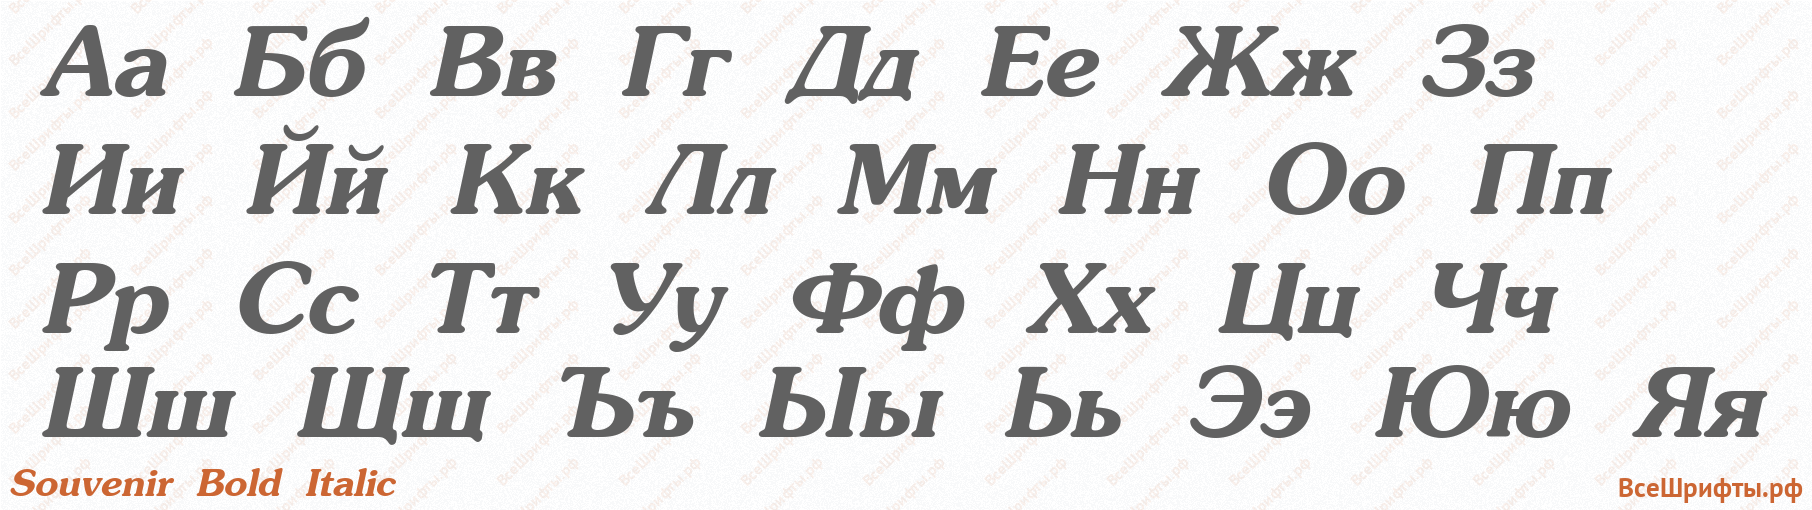 Шрифт Souvenir Bold Italic с русскими буквами